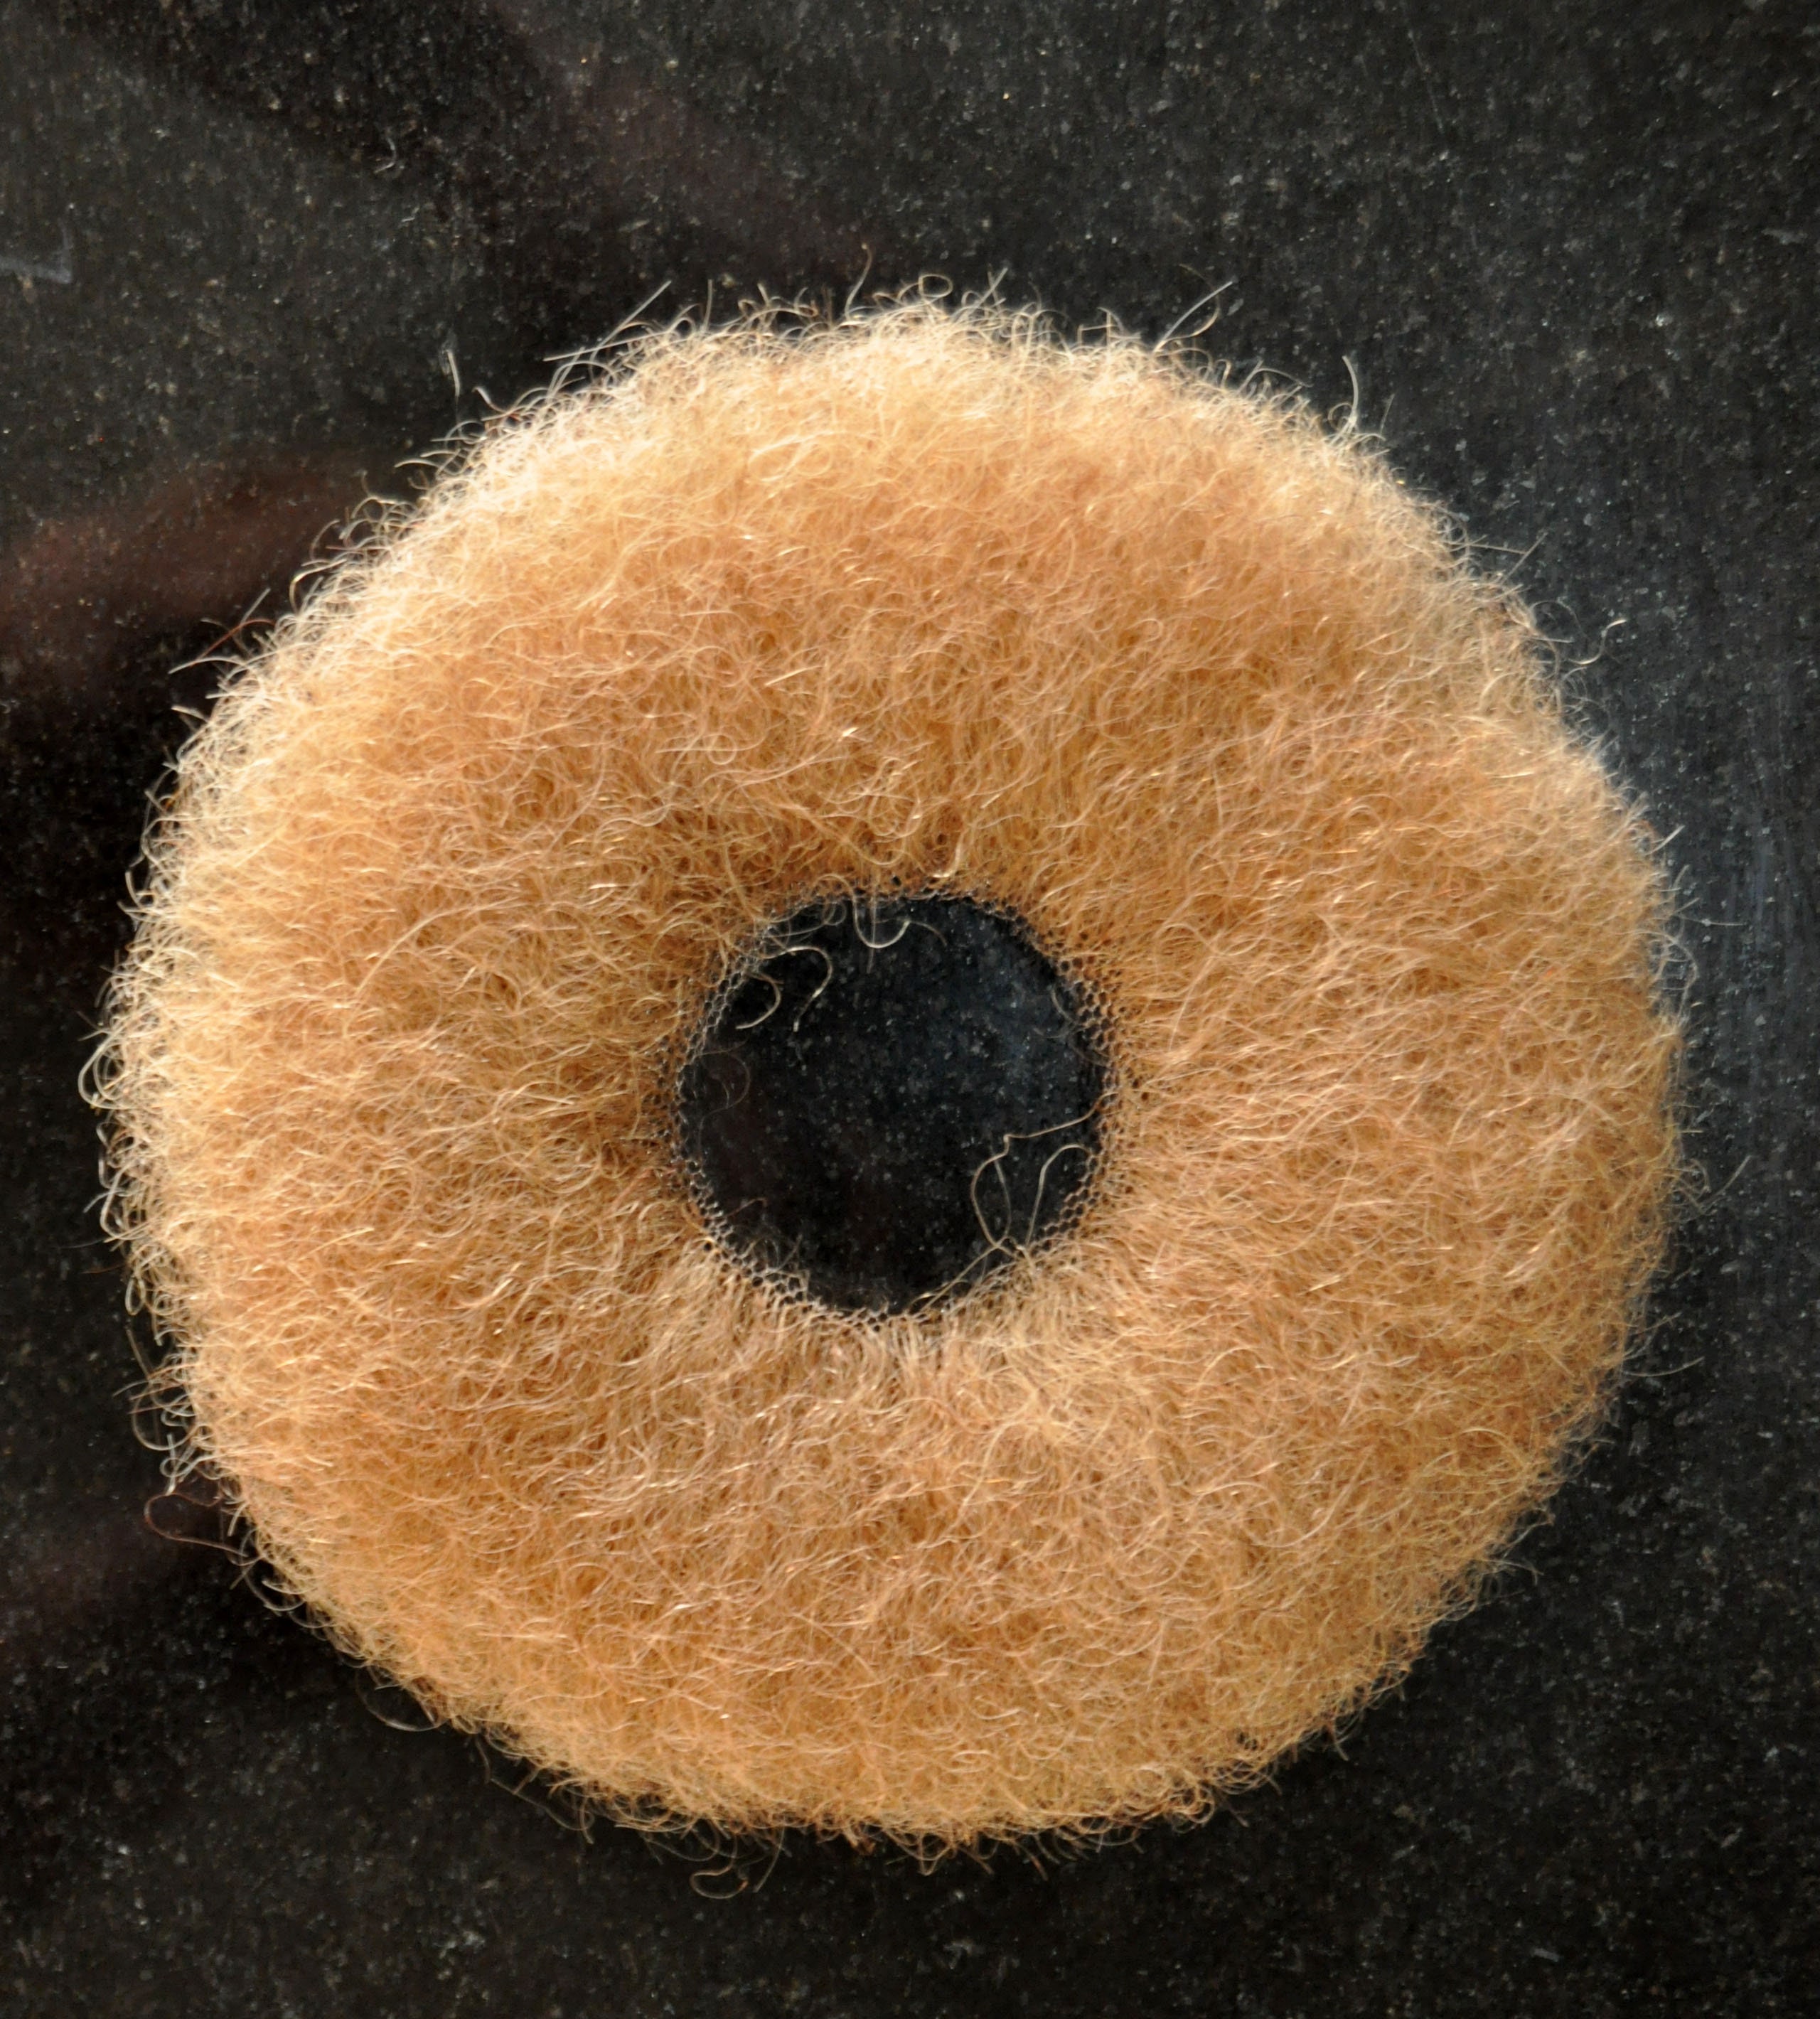 Female to Male, FTM Human Hair Merkin Female Male Pubic Toupee in Four  Colors, High Hair Density 21g, .74oz, -  Sweden